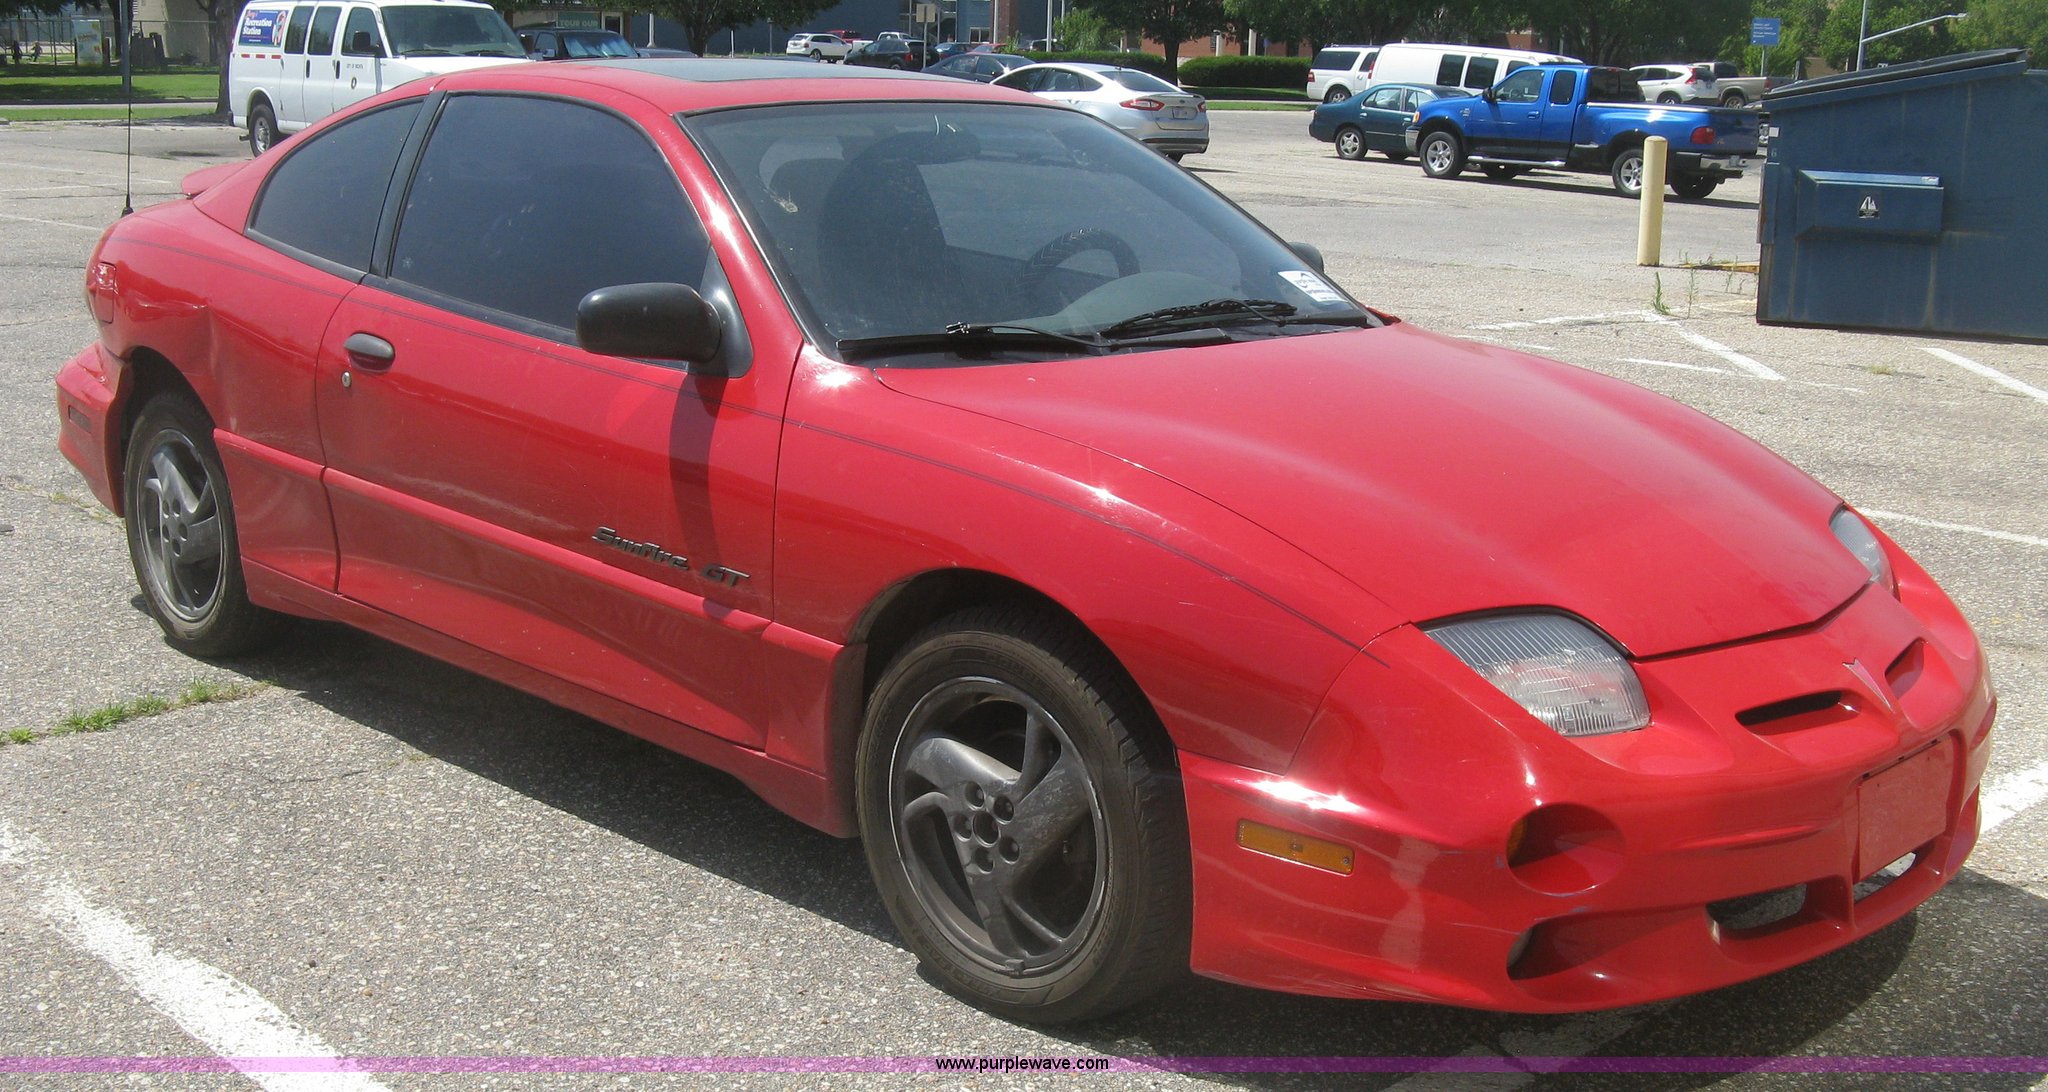 2001 Pontiac Sunfire GT in Wichita, KS | Item J2777 sold | Purple Wave